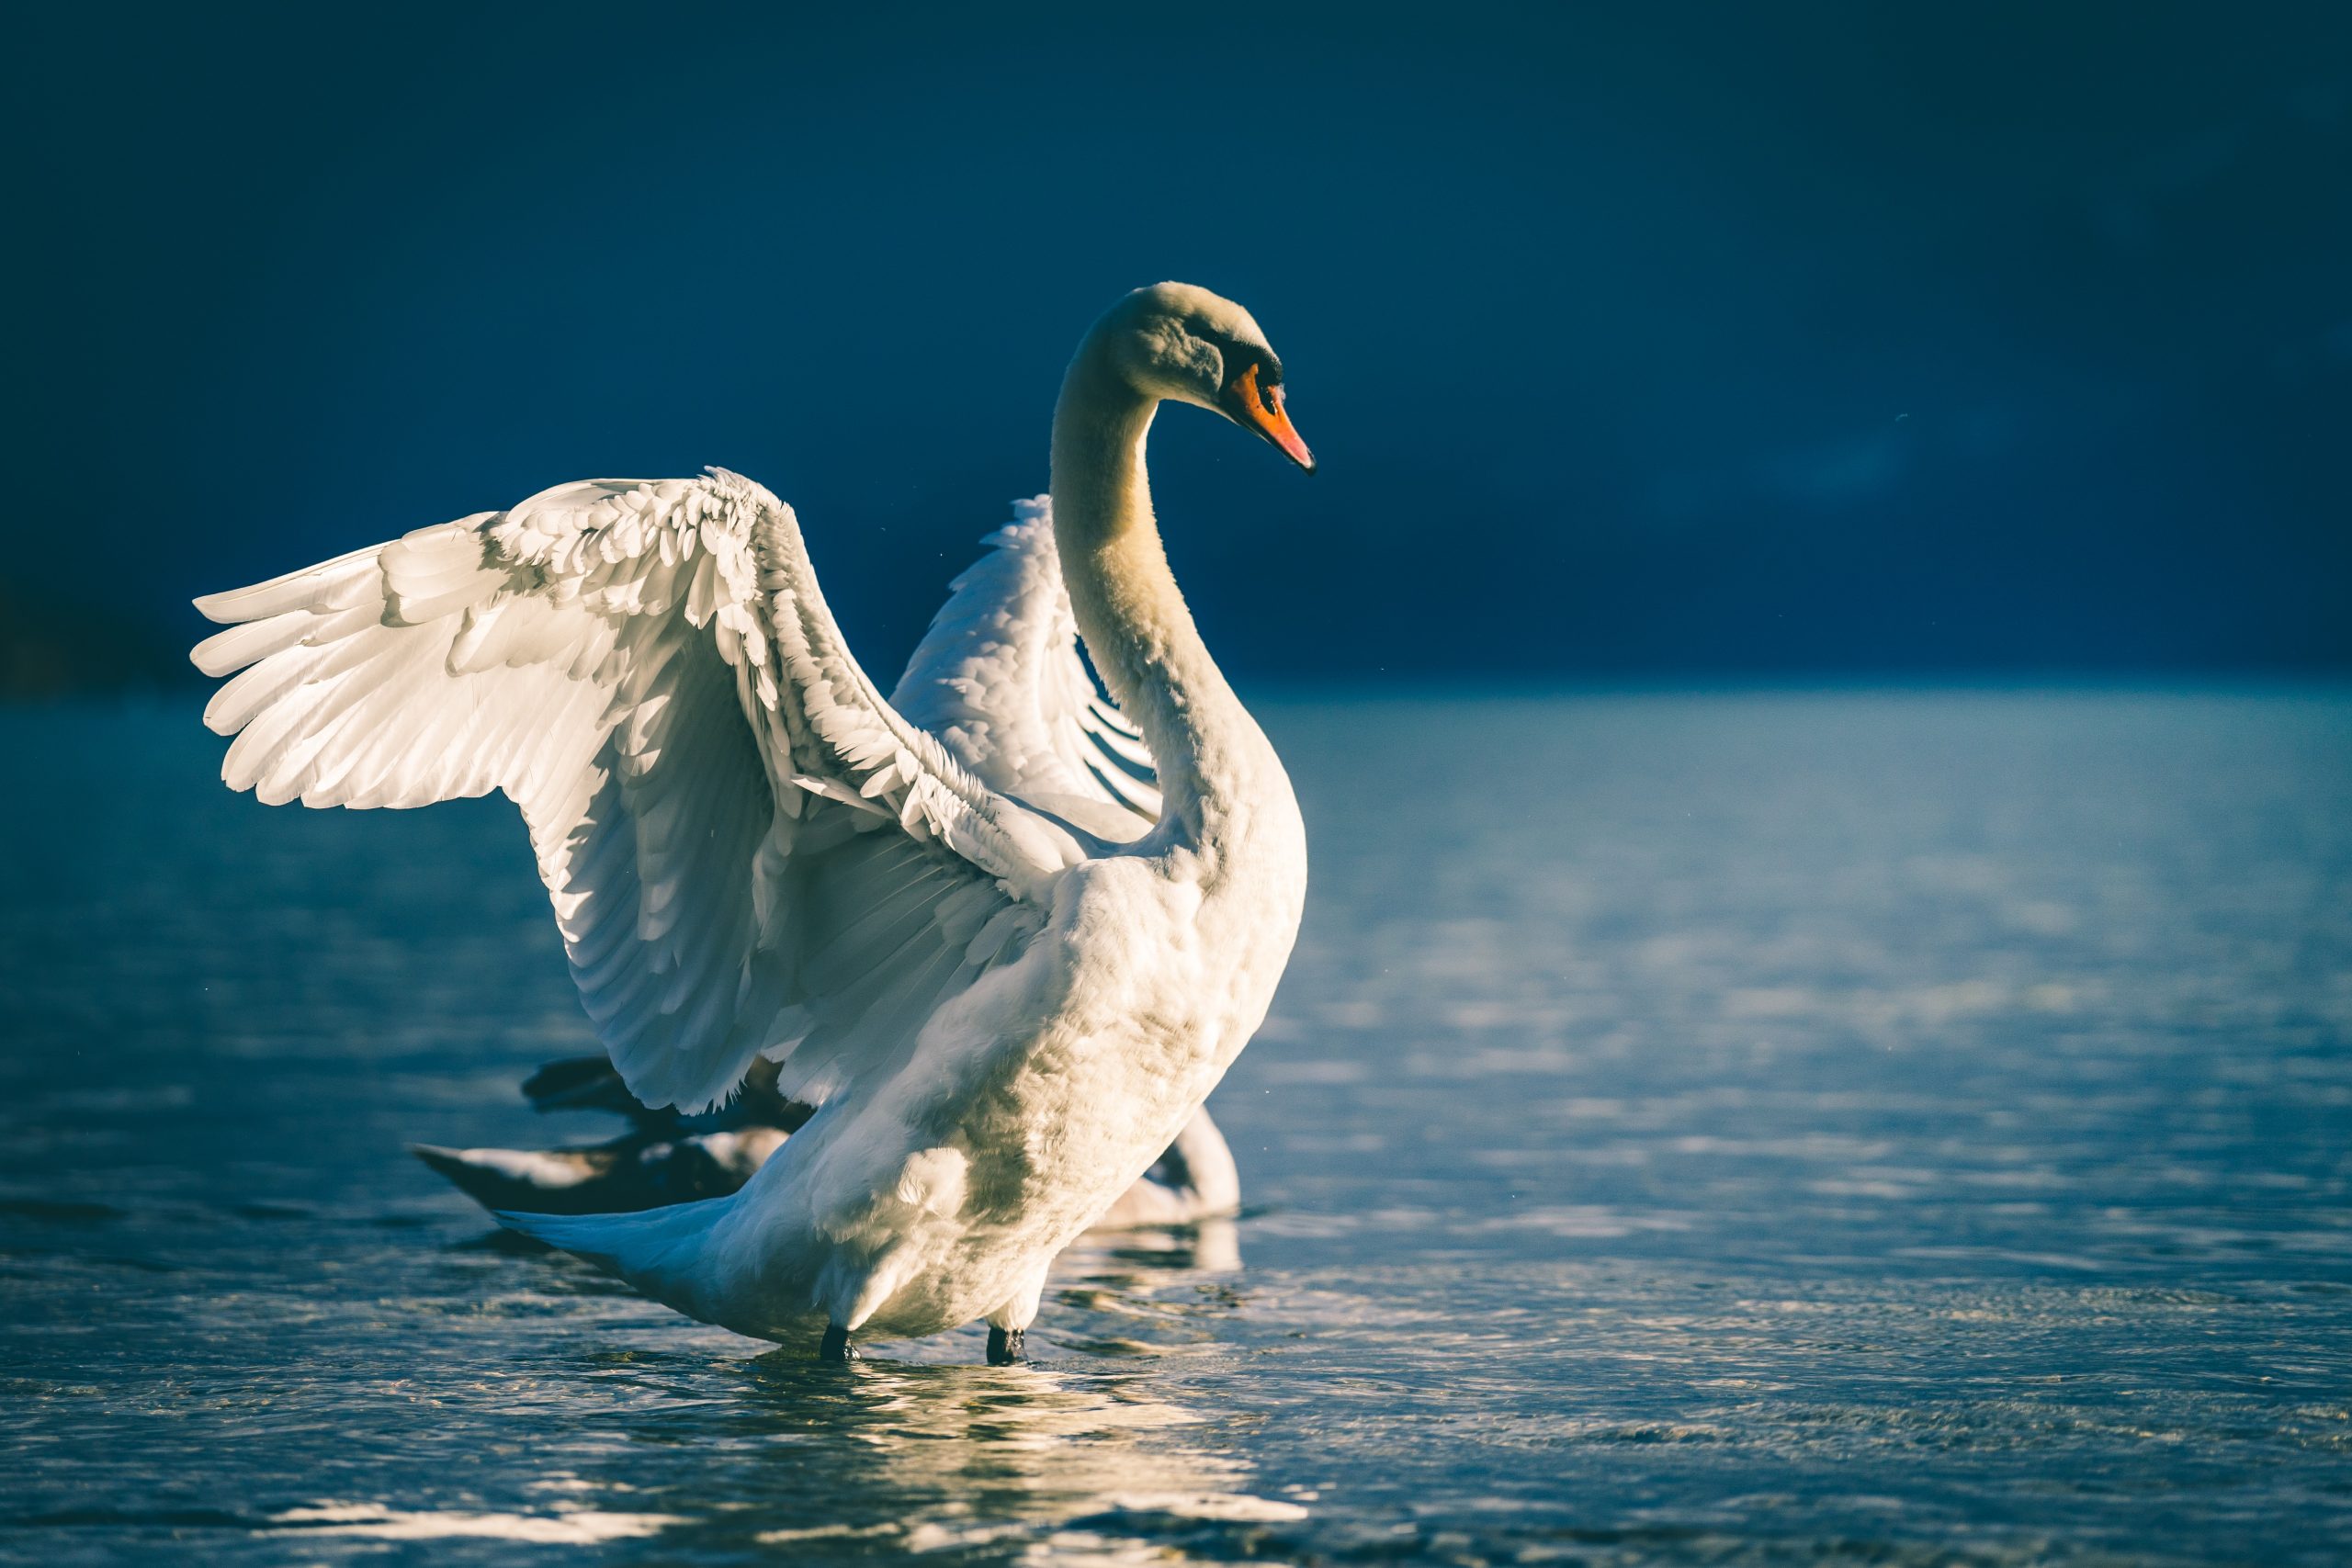 a swan in a lake